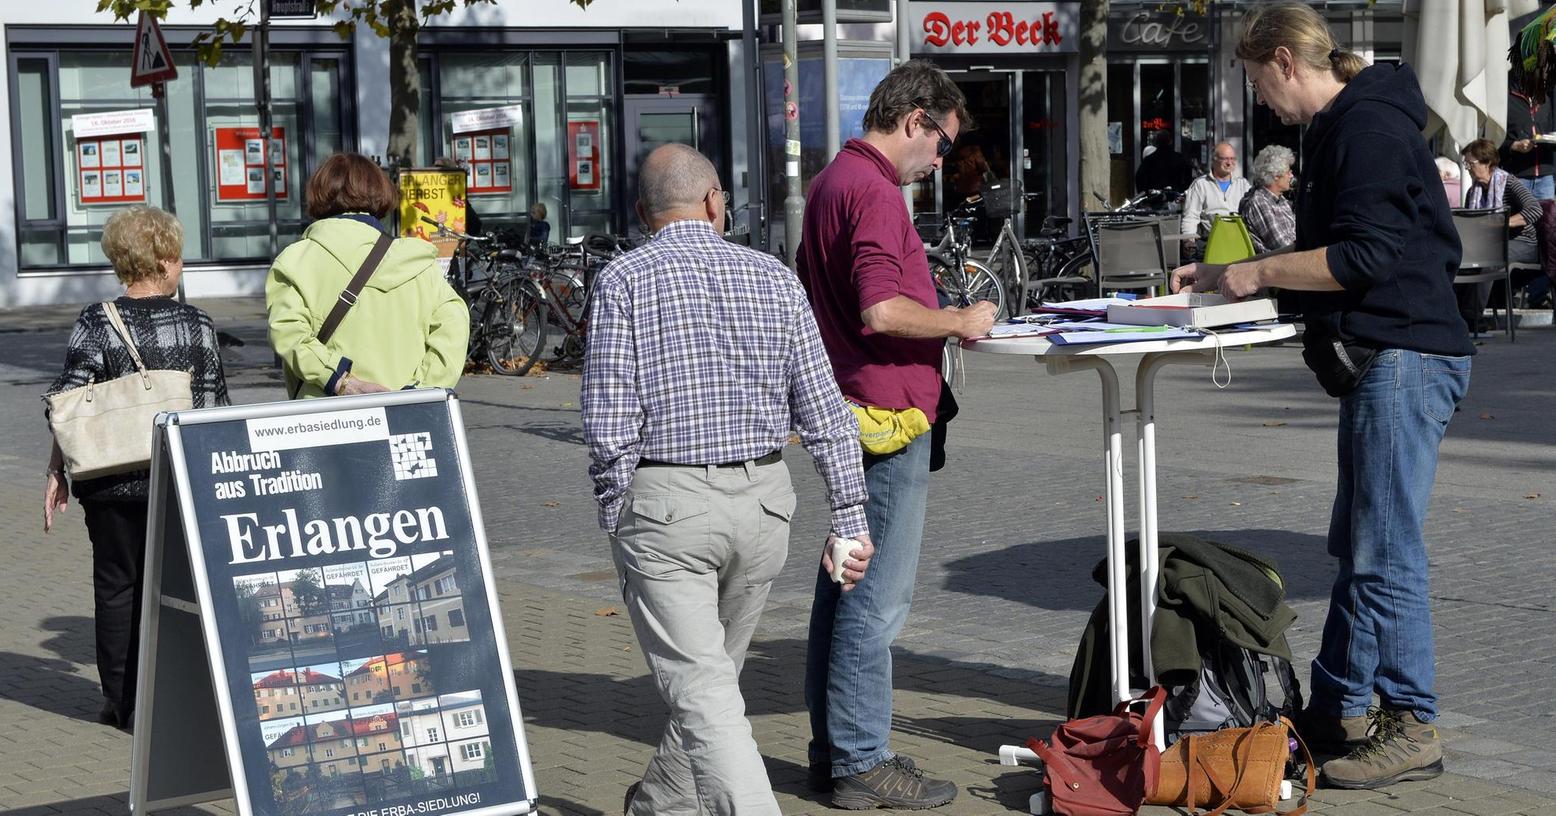 Erlangen: Schon 1100 Unterschriften gesammelt